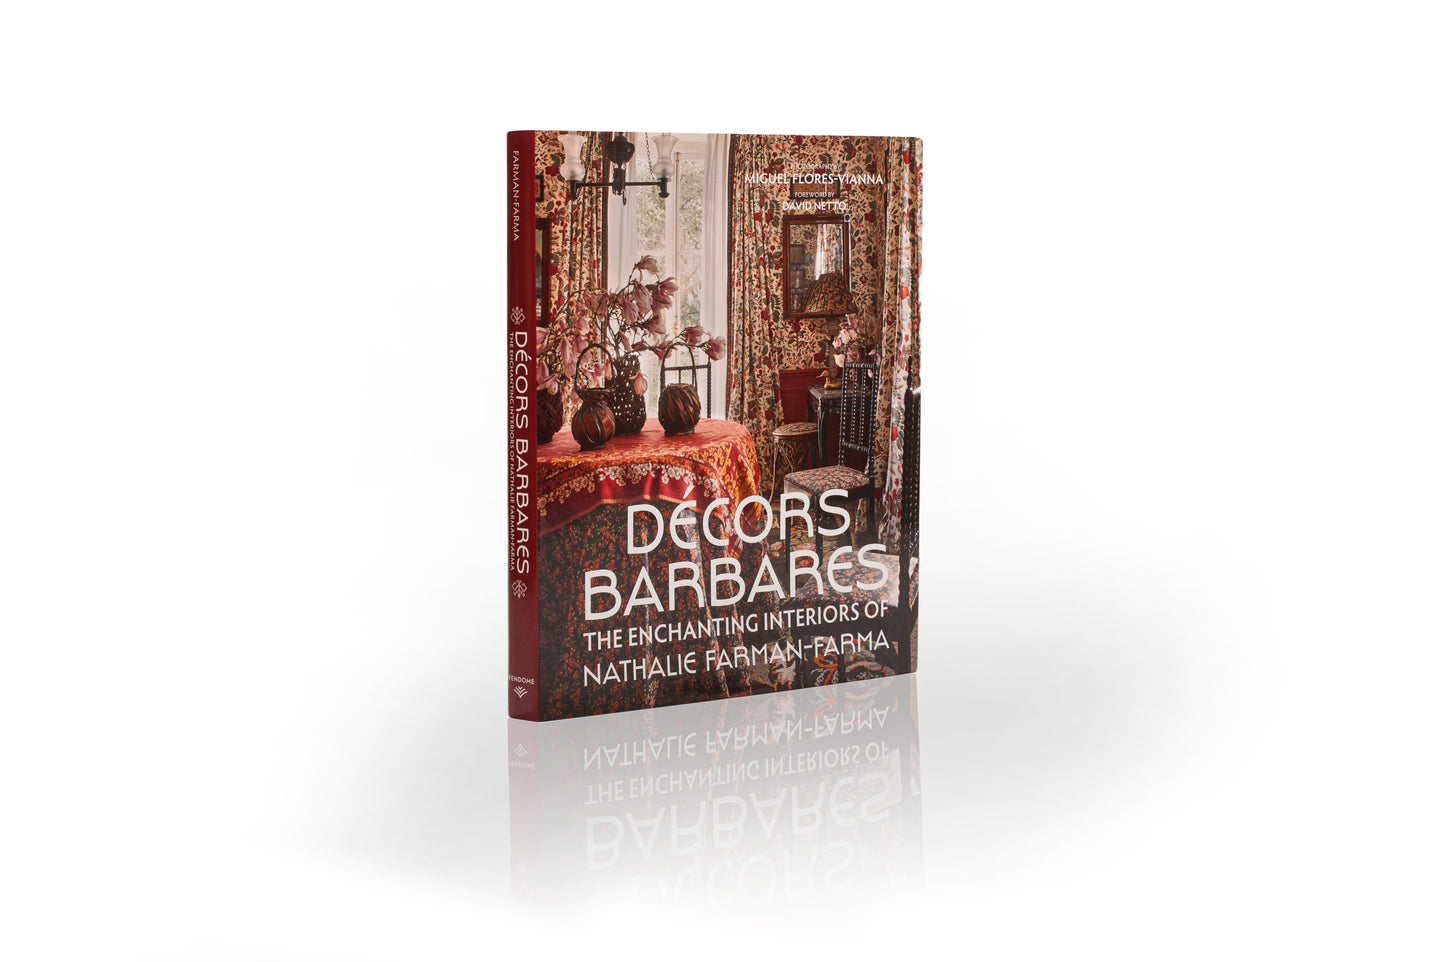 Décors Barbares: The Enchanting Interiors of Nathalie Farman-Farma  – Signature Edition